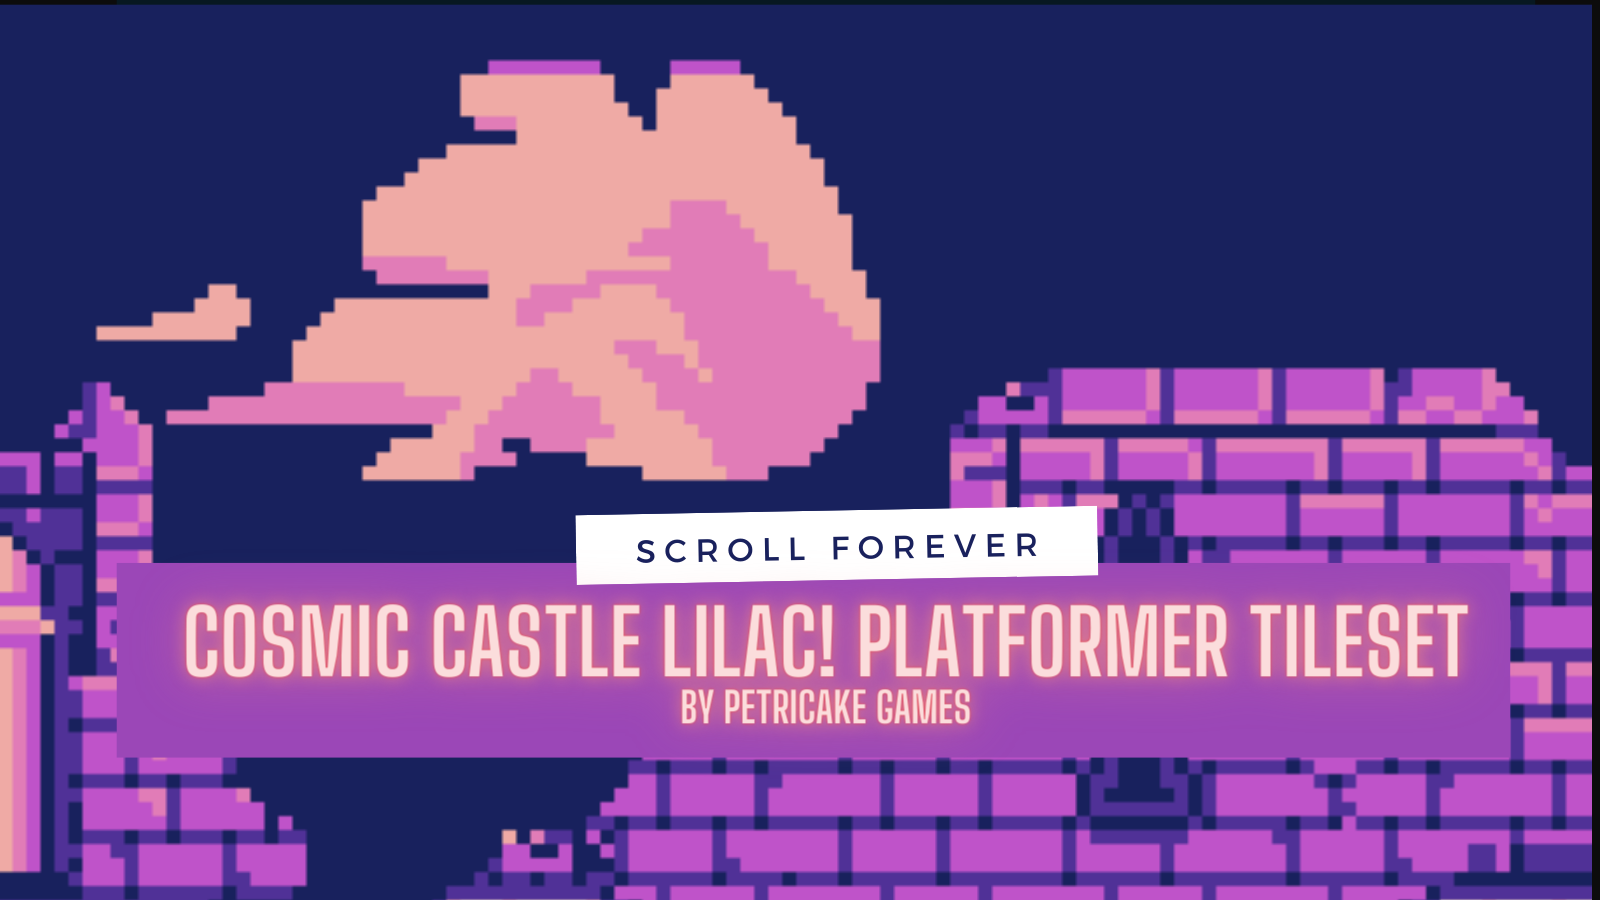 Cosmic Castle Lilac! Platformer Tileset